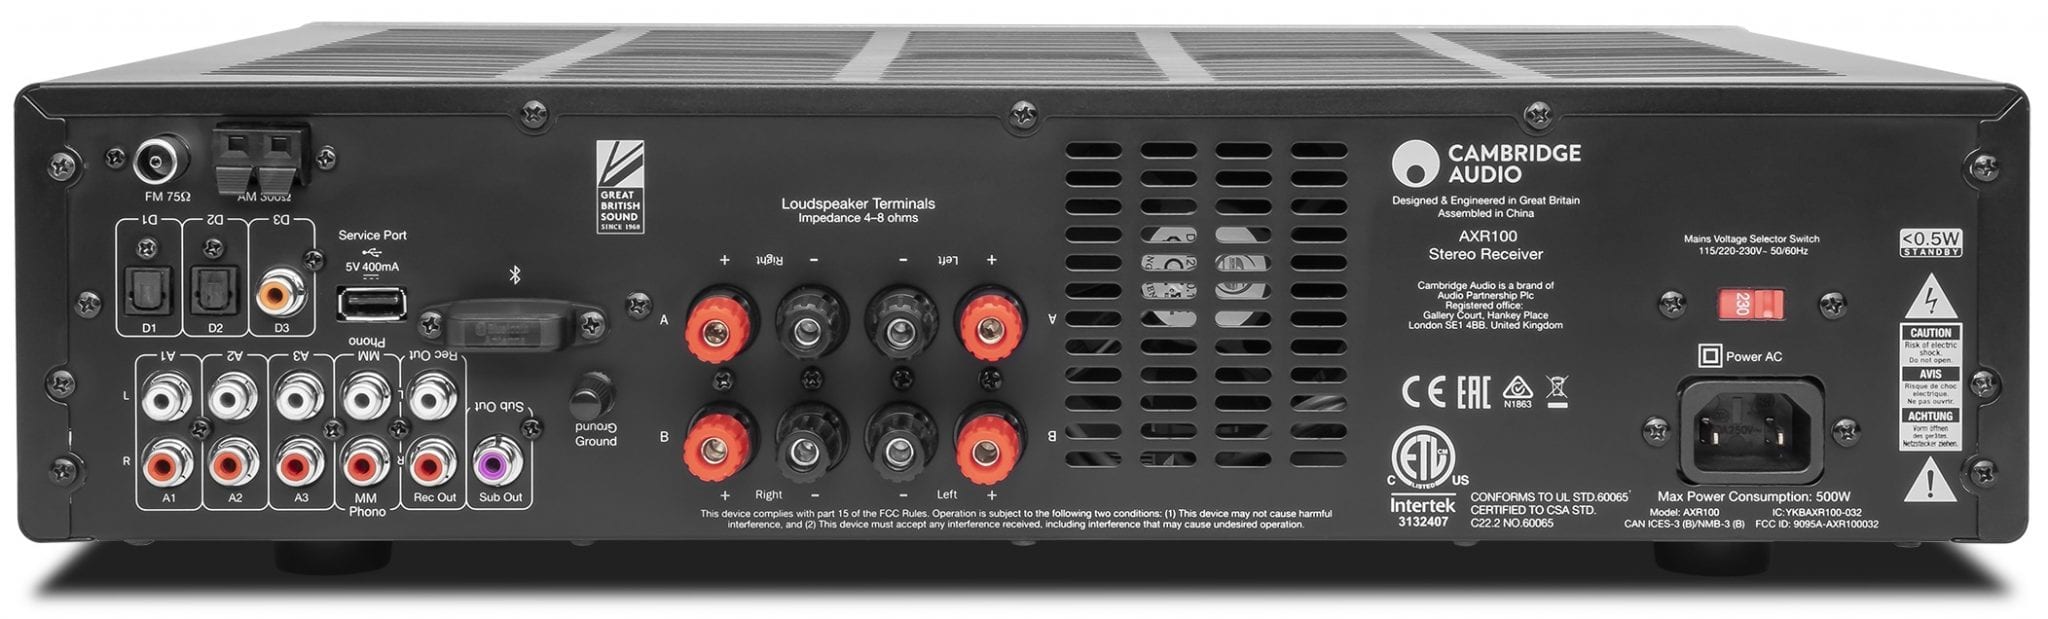 Cambridge Audio AXR100 grijs - achterkant - Stereo receiver